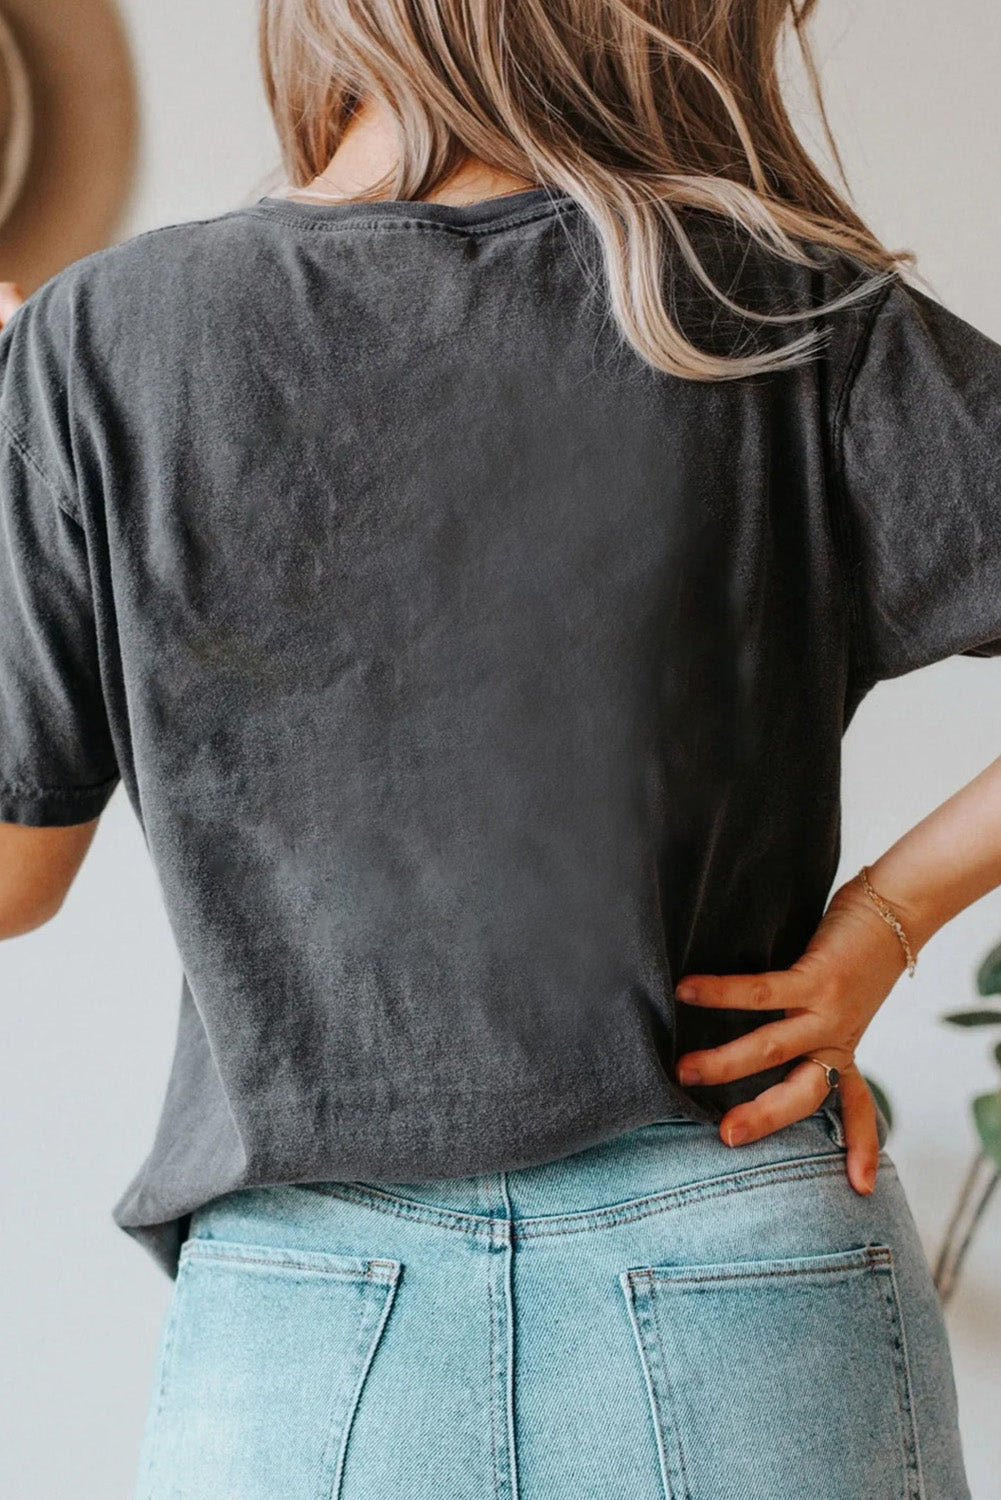 Black Wild West Western Pattern Print Mineral Wash T Shirt Graphic Tees JT's Designer Fashion